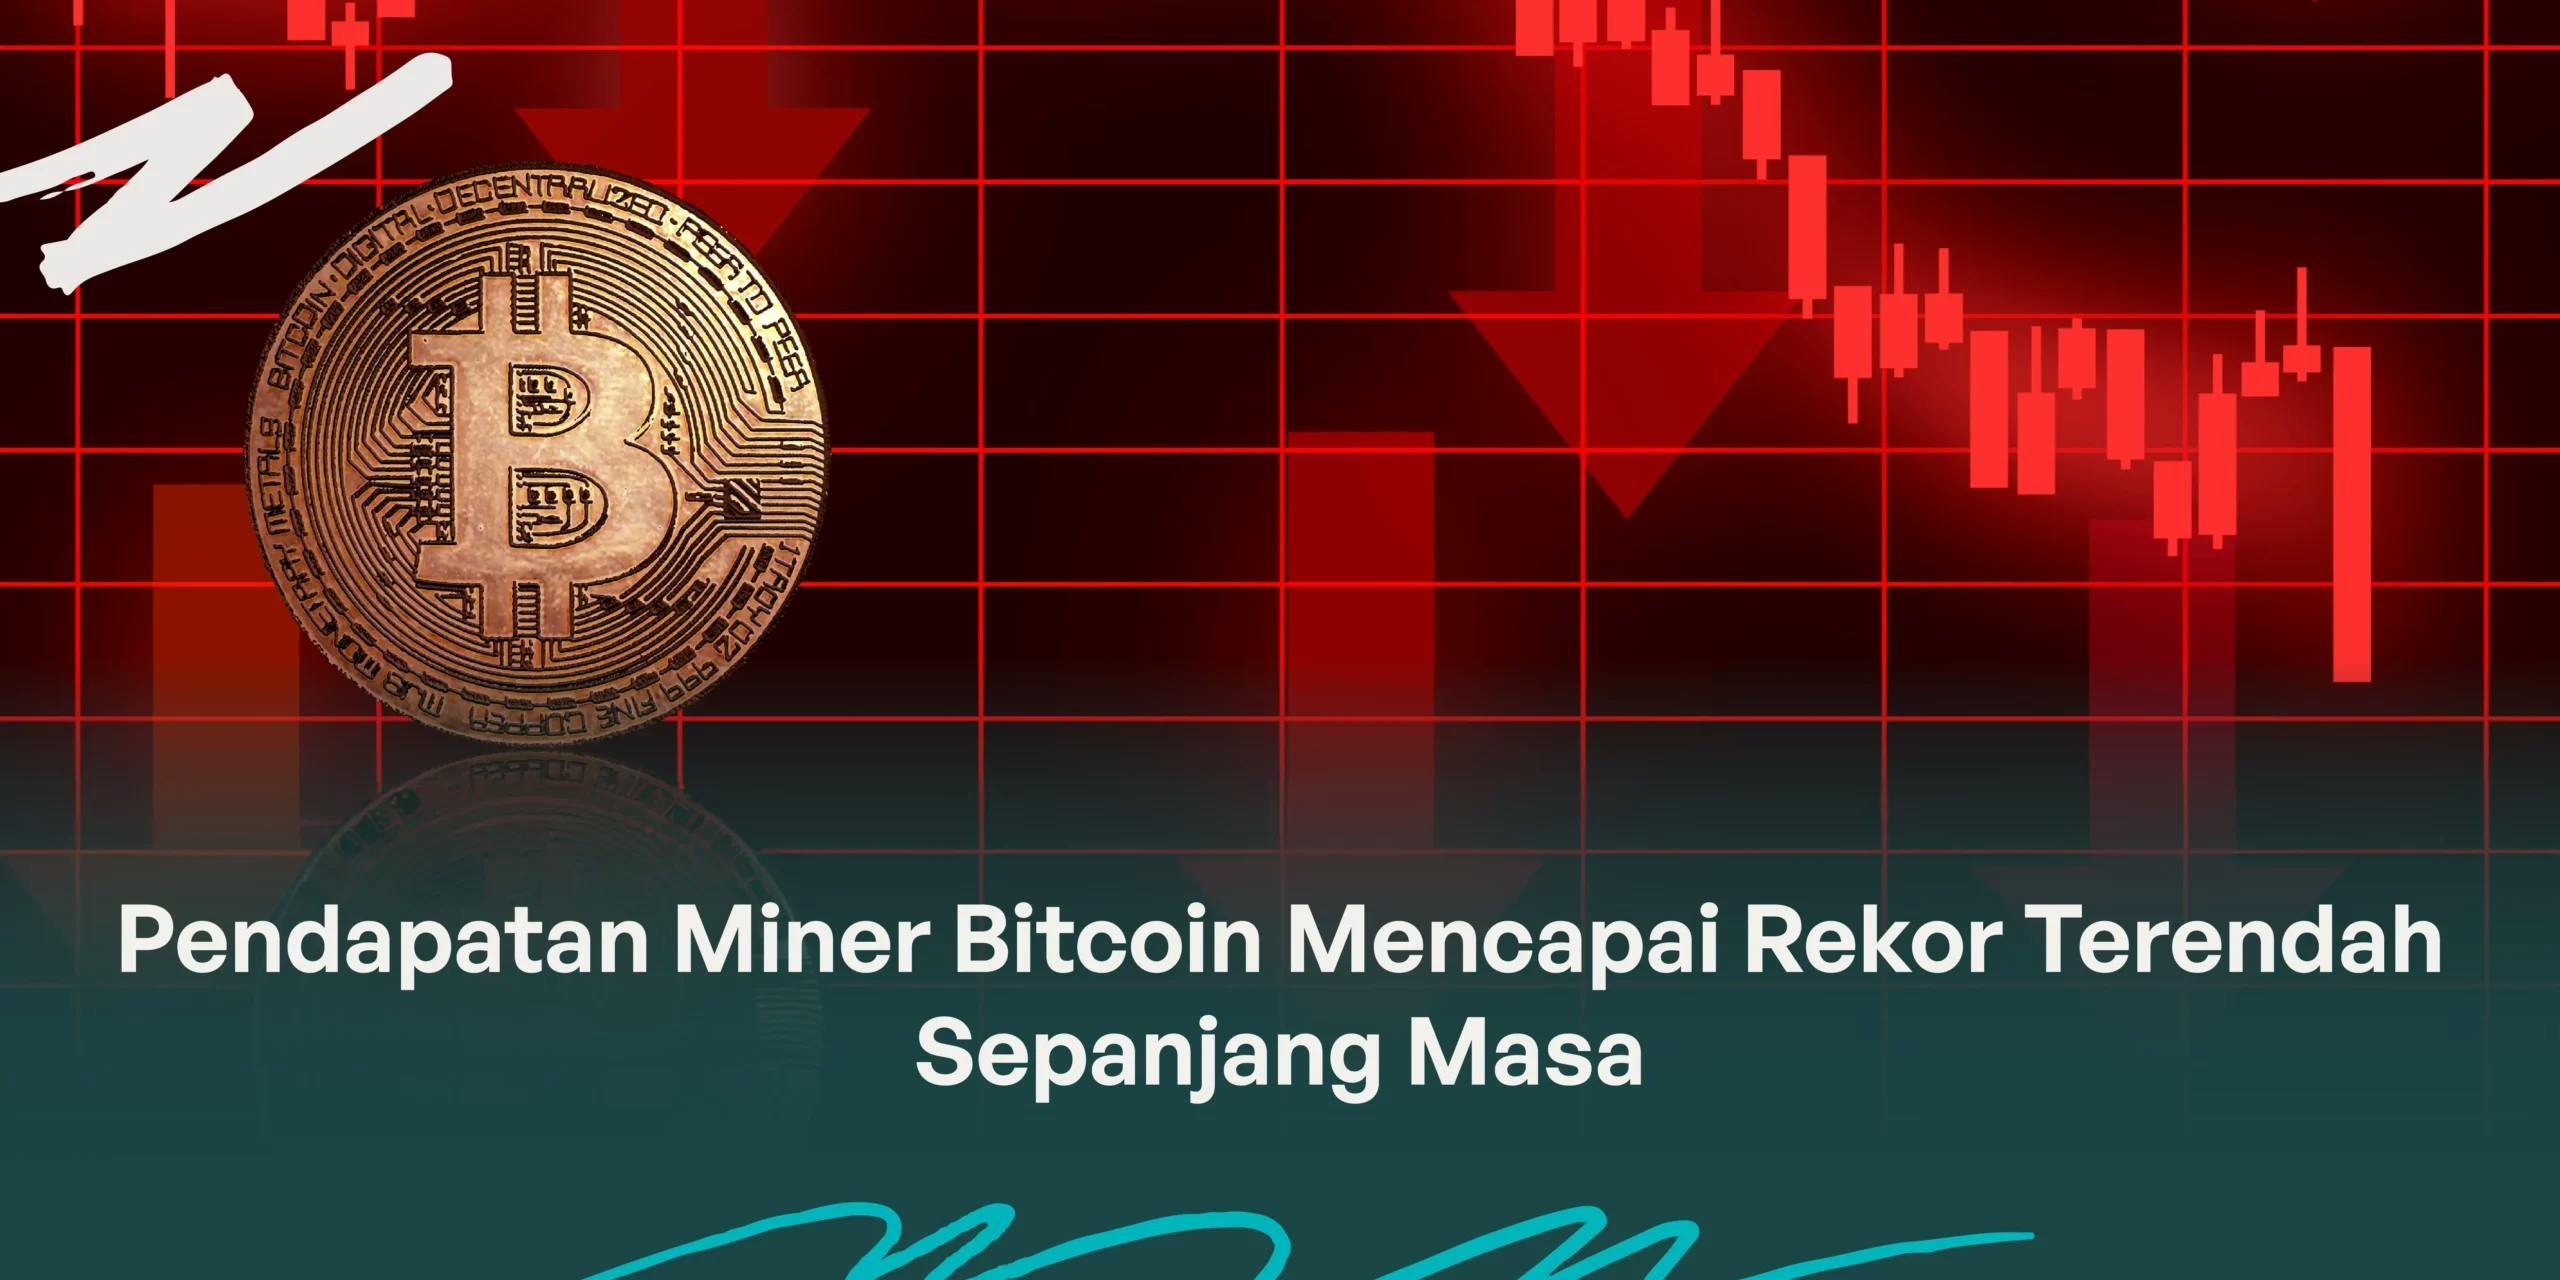 Pendapatan Miner Bitcoin Mencapai Rekor Terendah Sepanjang Masa